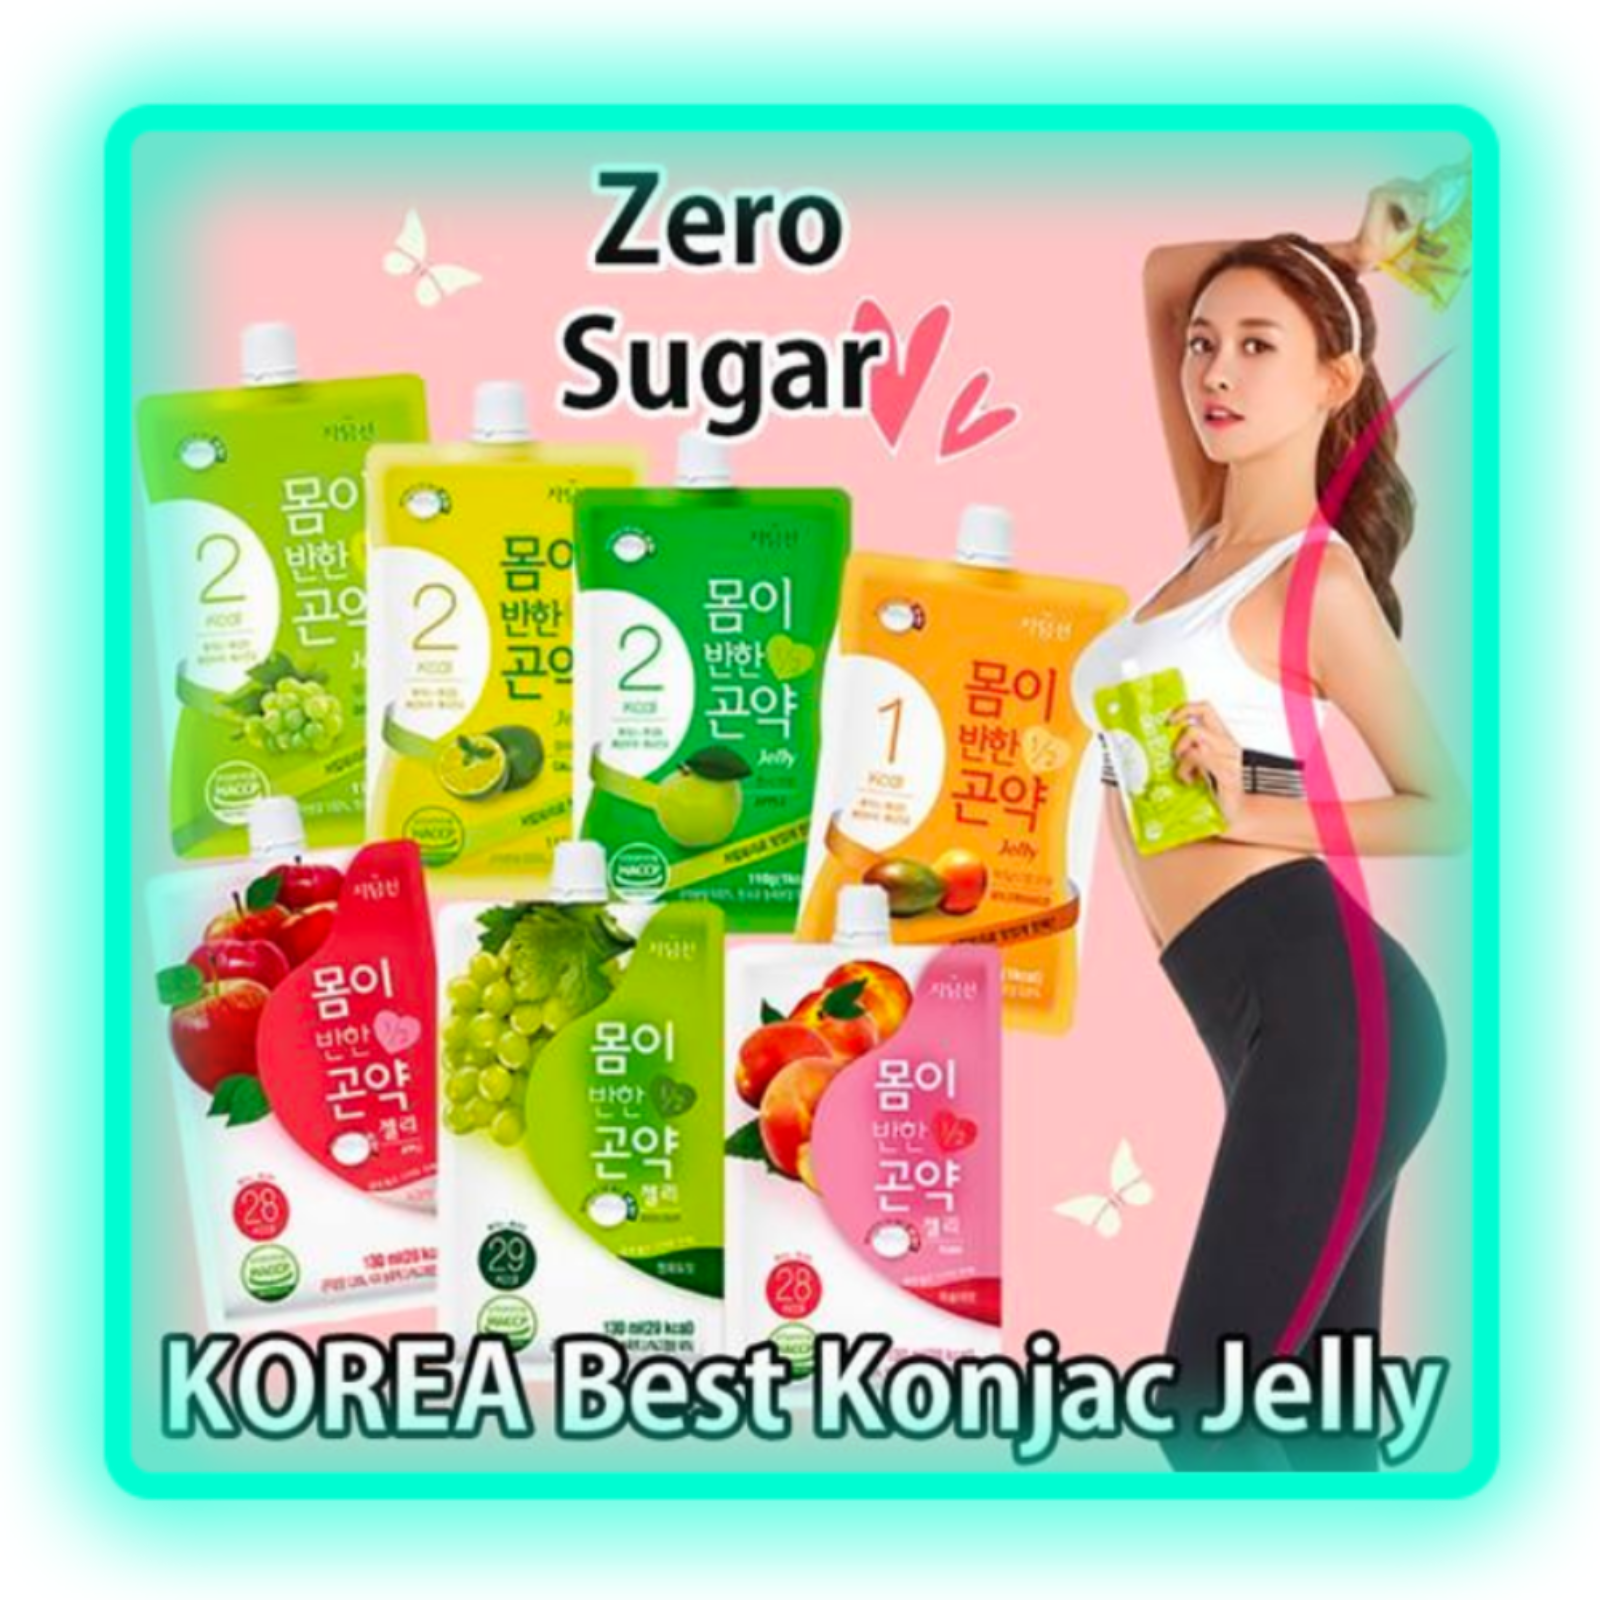 Healthy Low Kcal Double Konjac Jelly - Top Diet Jelly Brand in Korea​